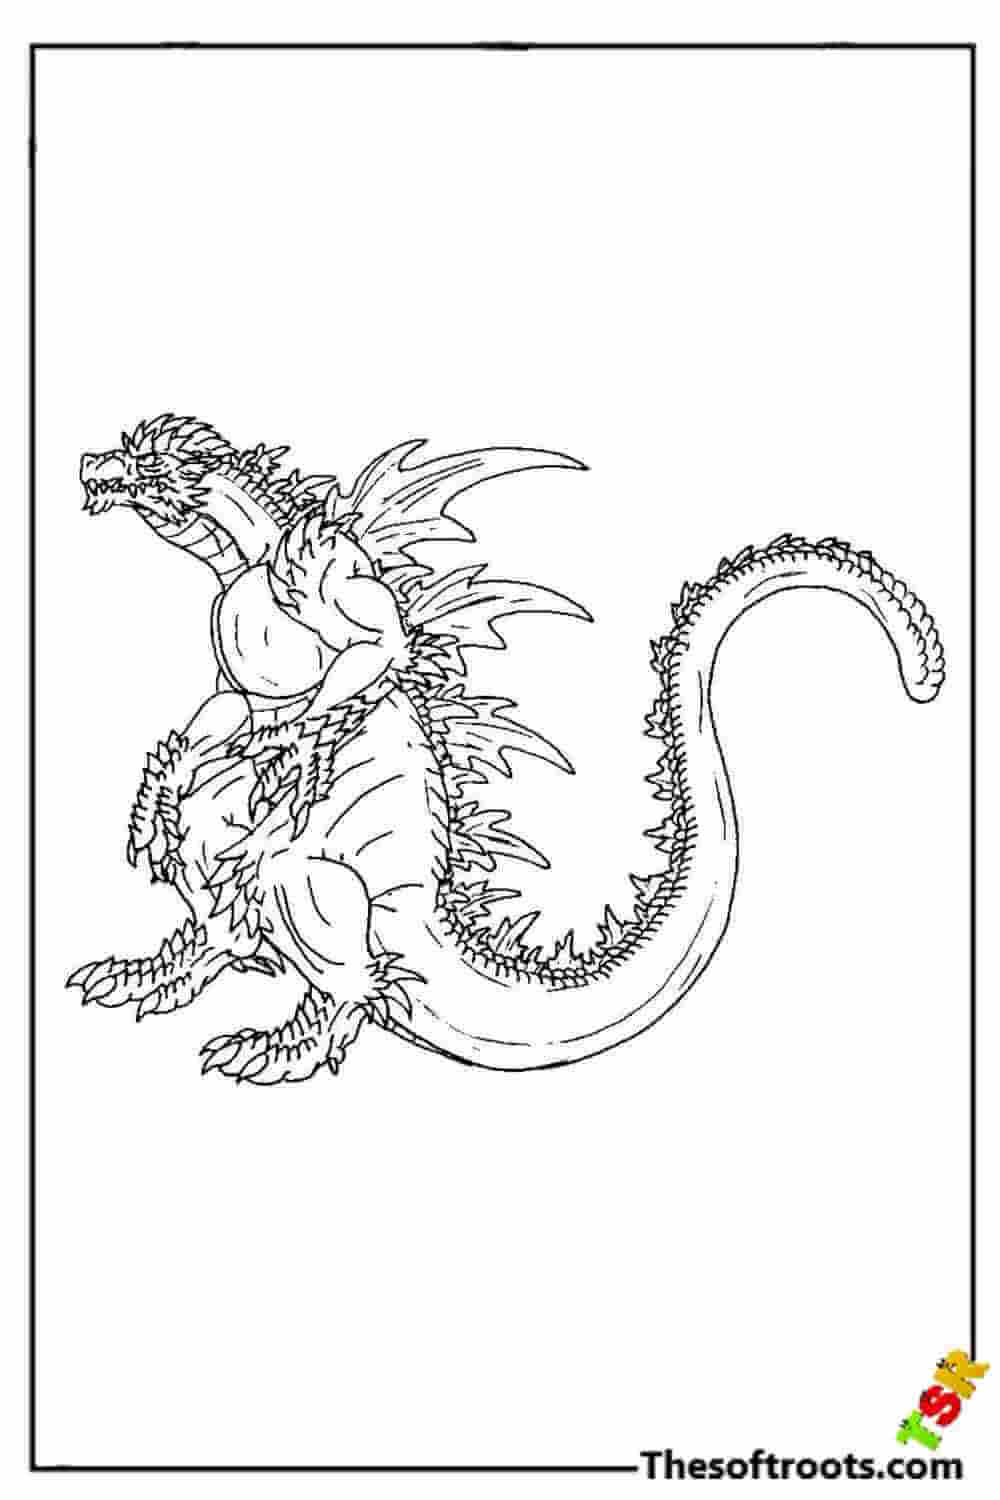 Free Printable Godzilla coloring pages